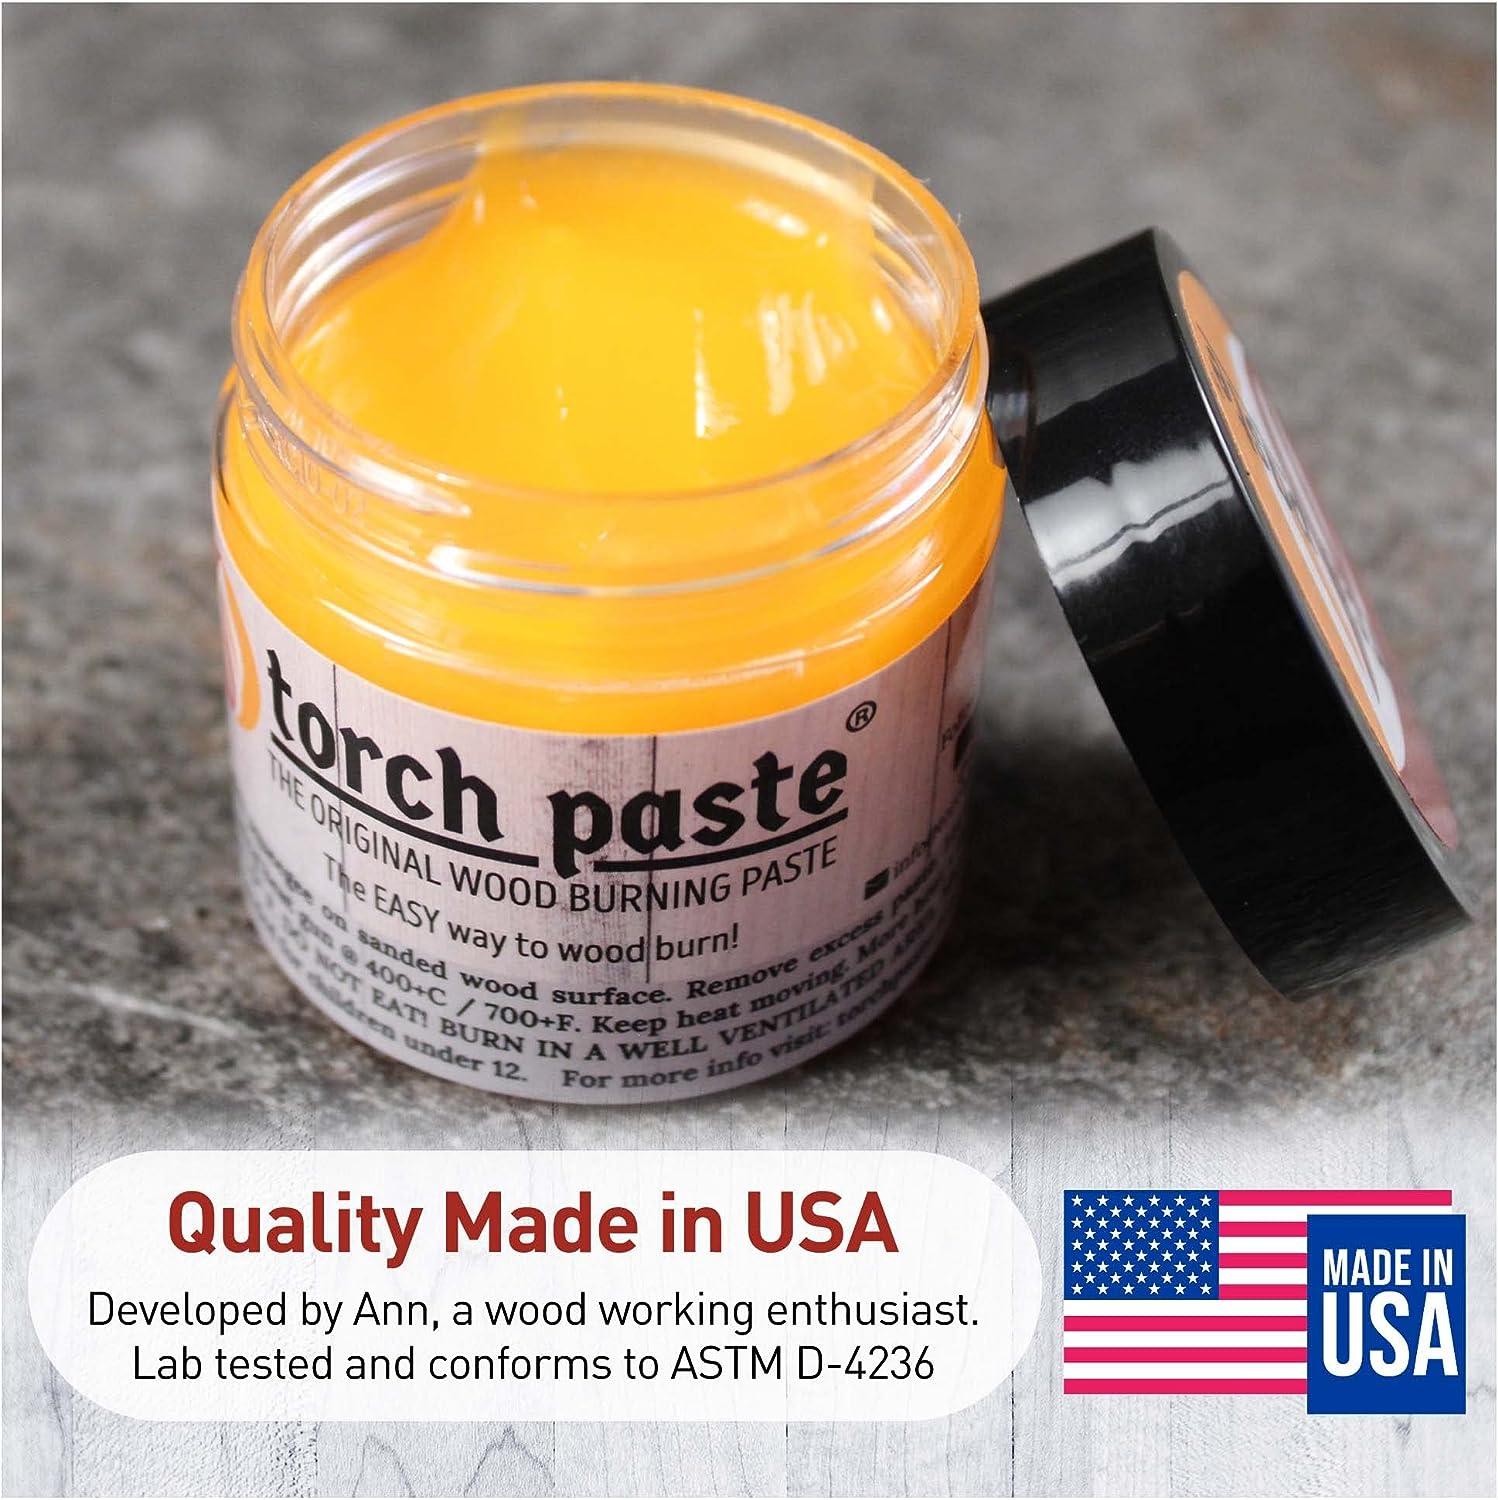 TORCH PASTE THE ORIGINAL WOOD BURNING PASTE - Torch Paste LLC Trademark  Registration